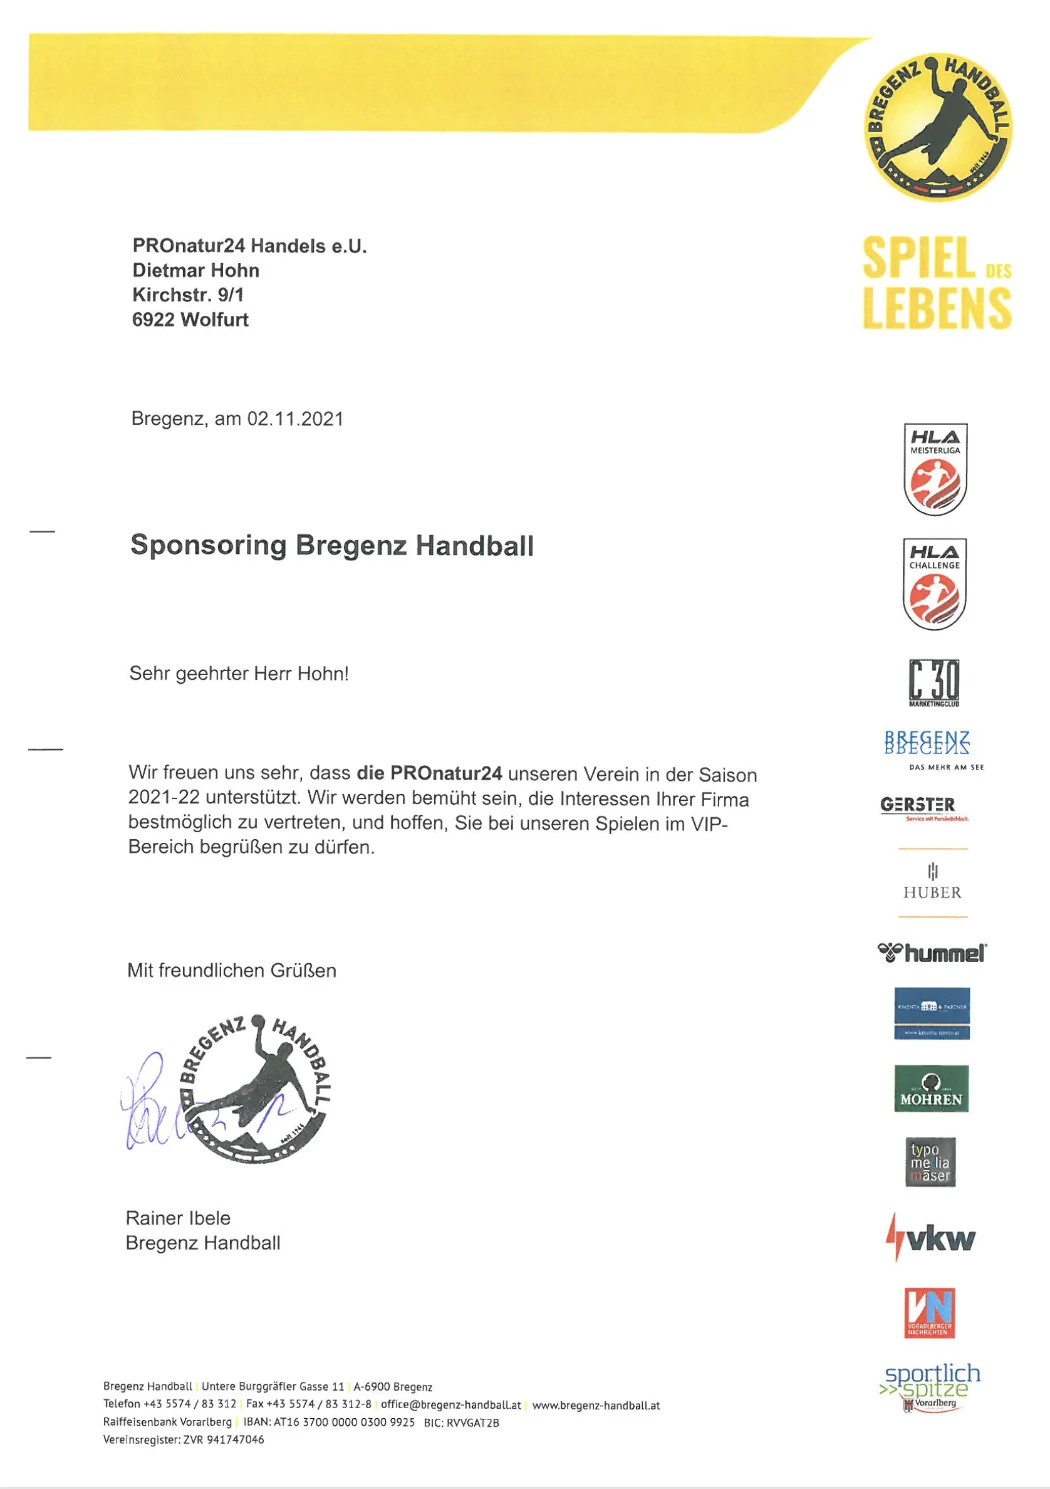 Bregenz Hand Sponsoring